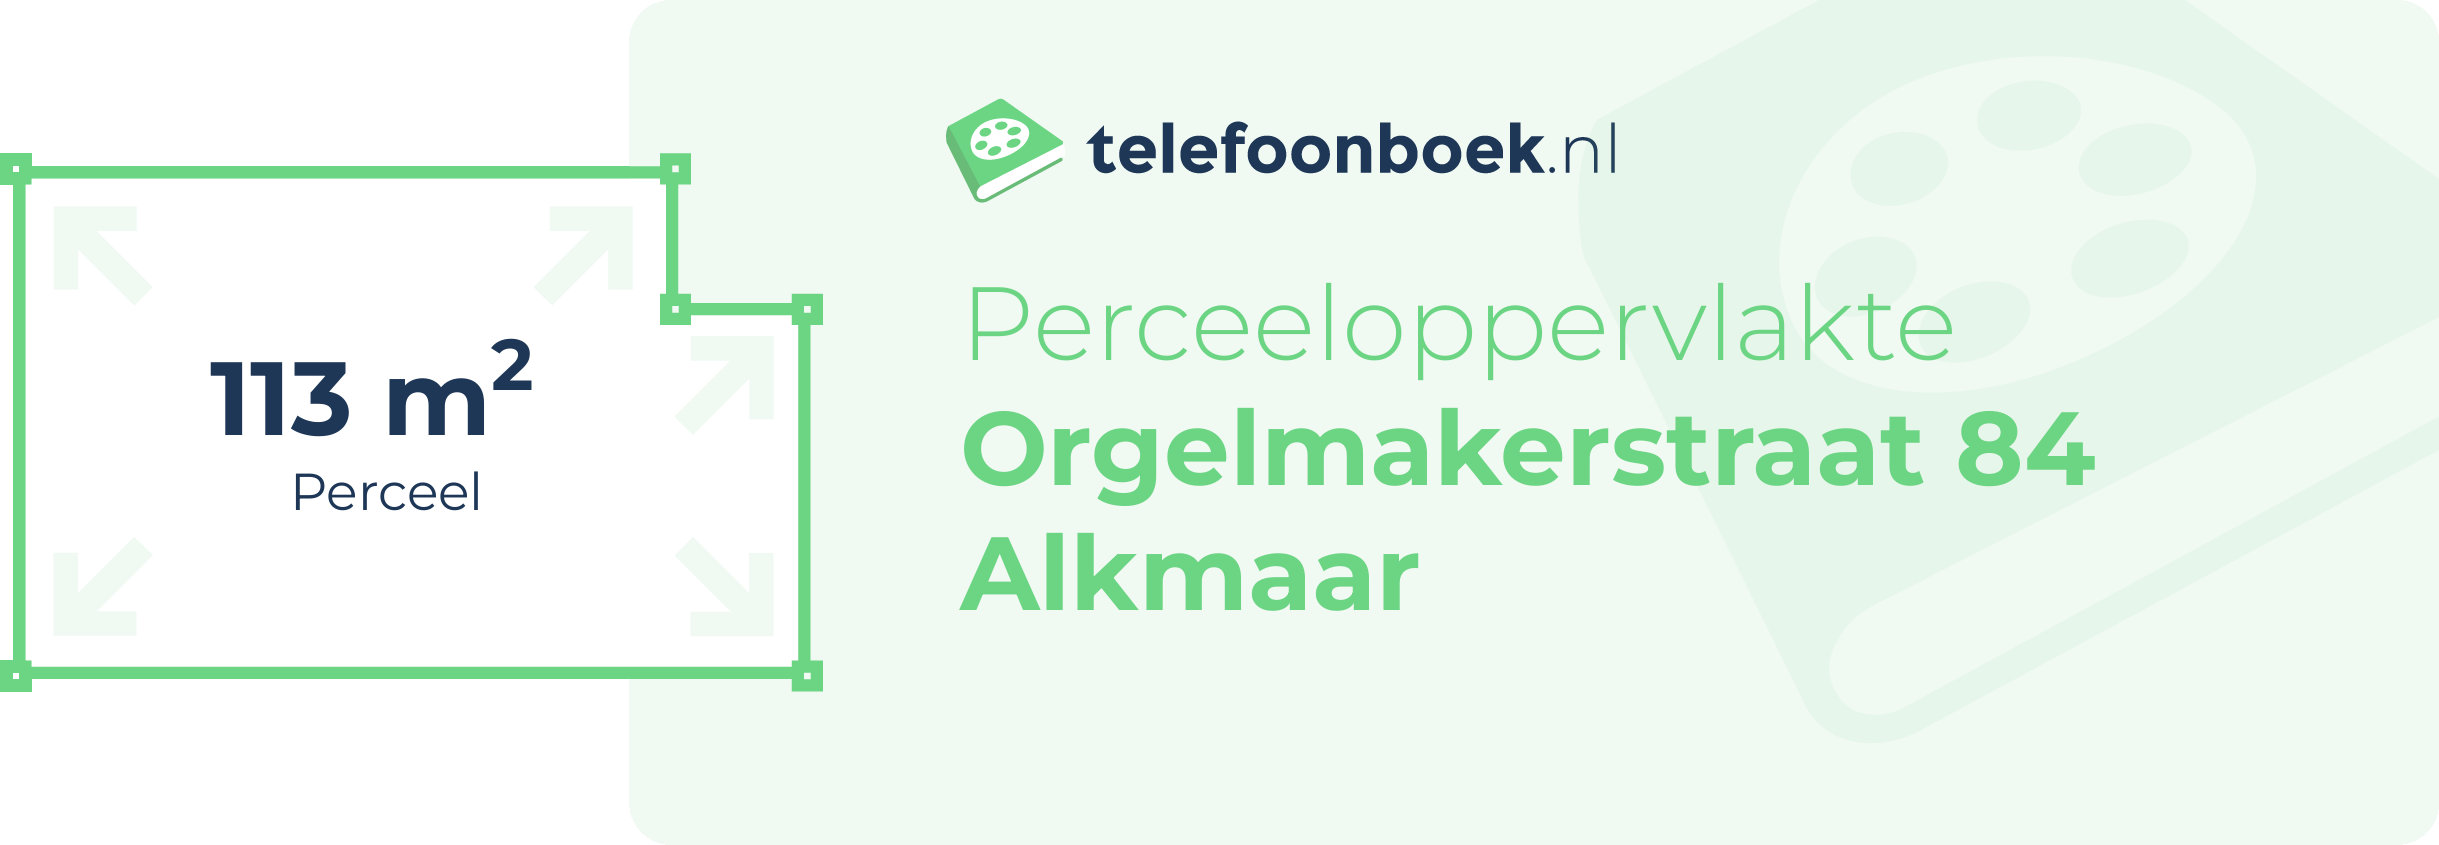 Perceeloppervlakte Orgelmakerstraat 84 Alkmaar